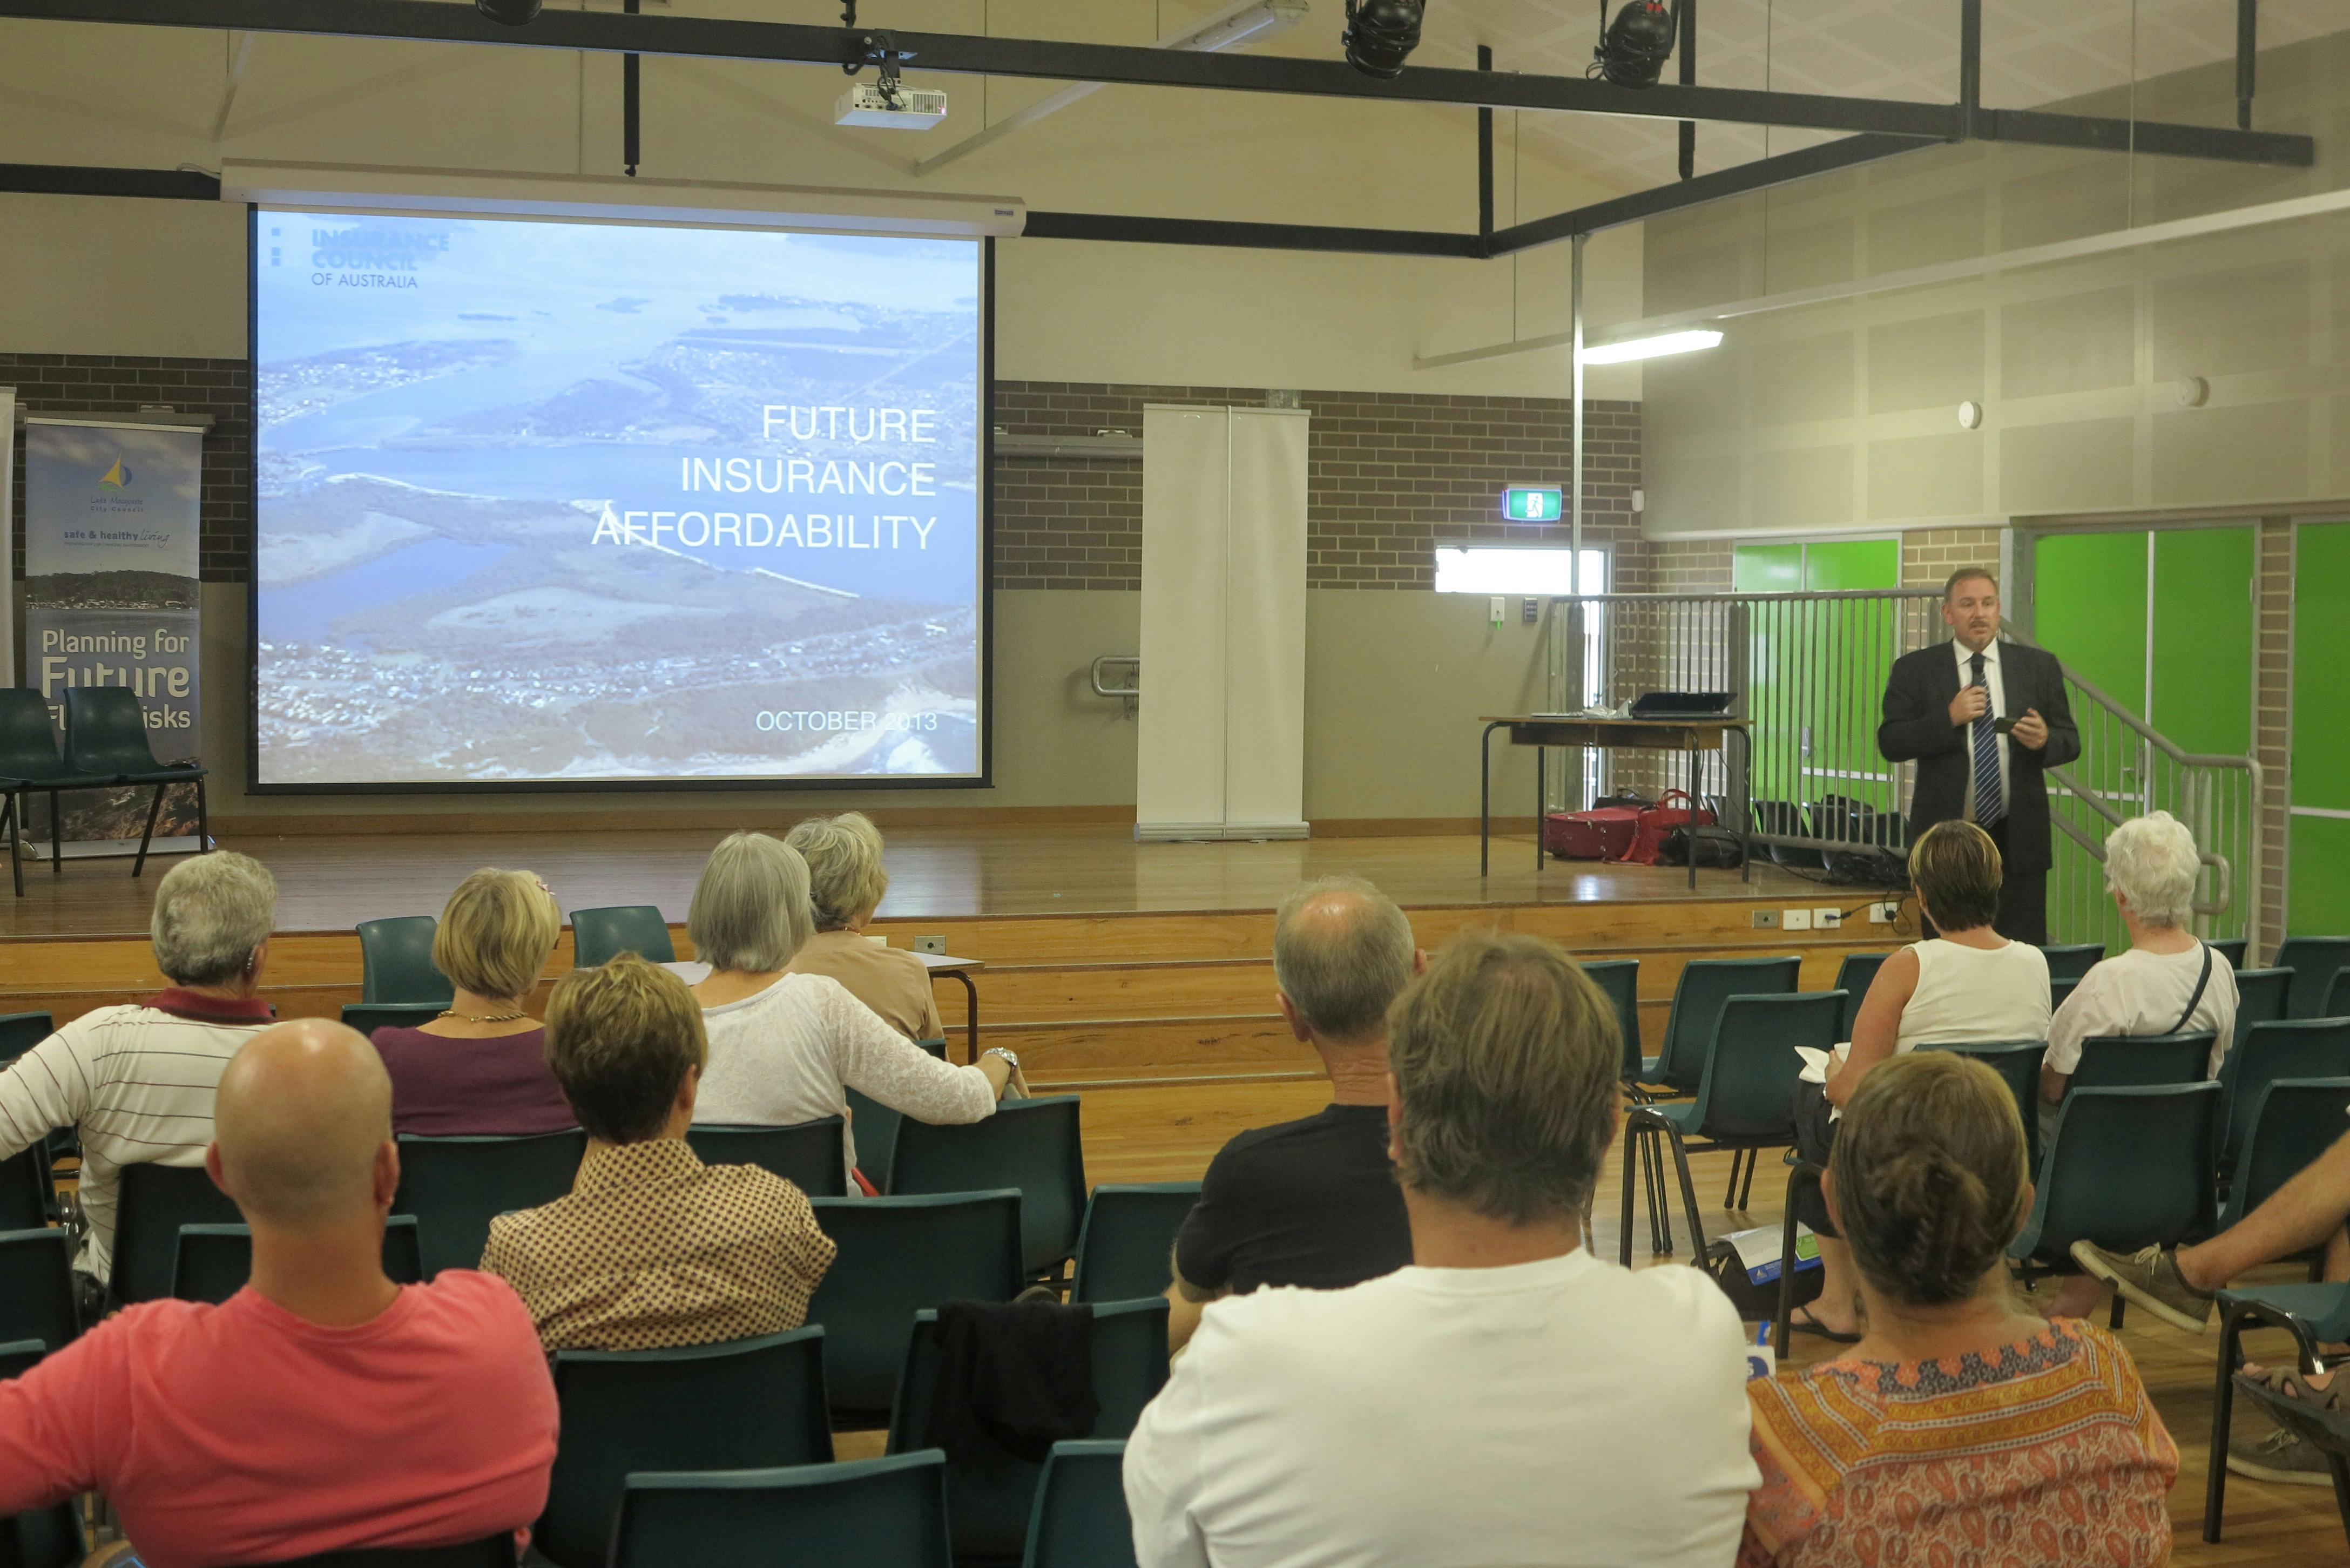 Presentation from Insurance Councilof Australia February 13, 2014